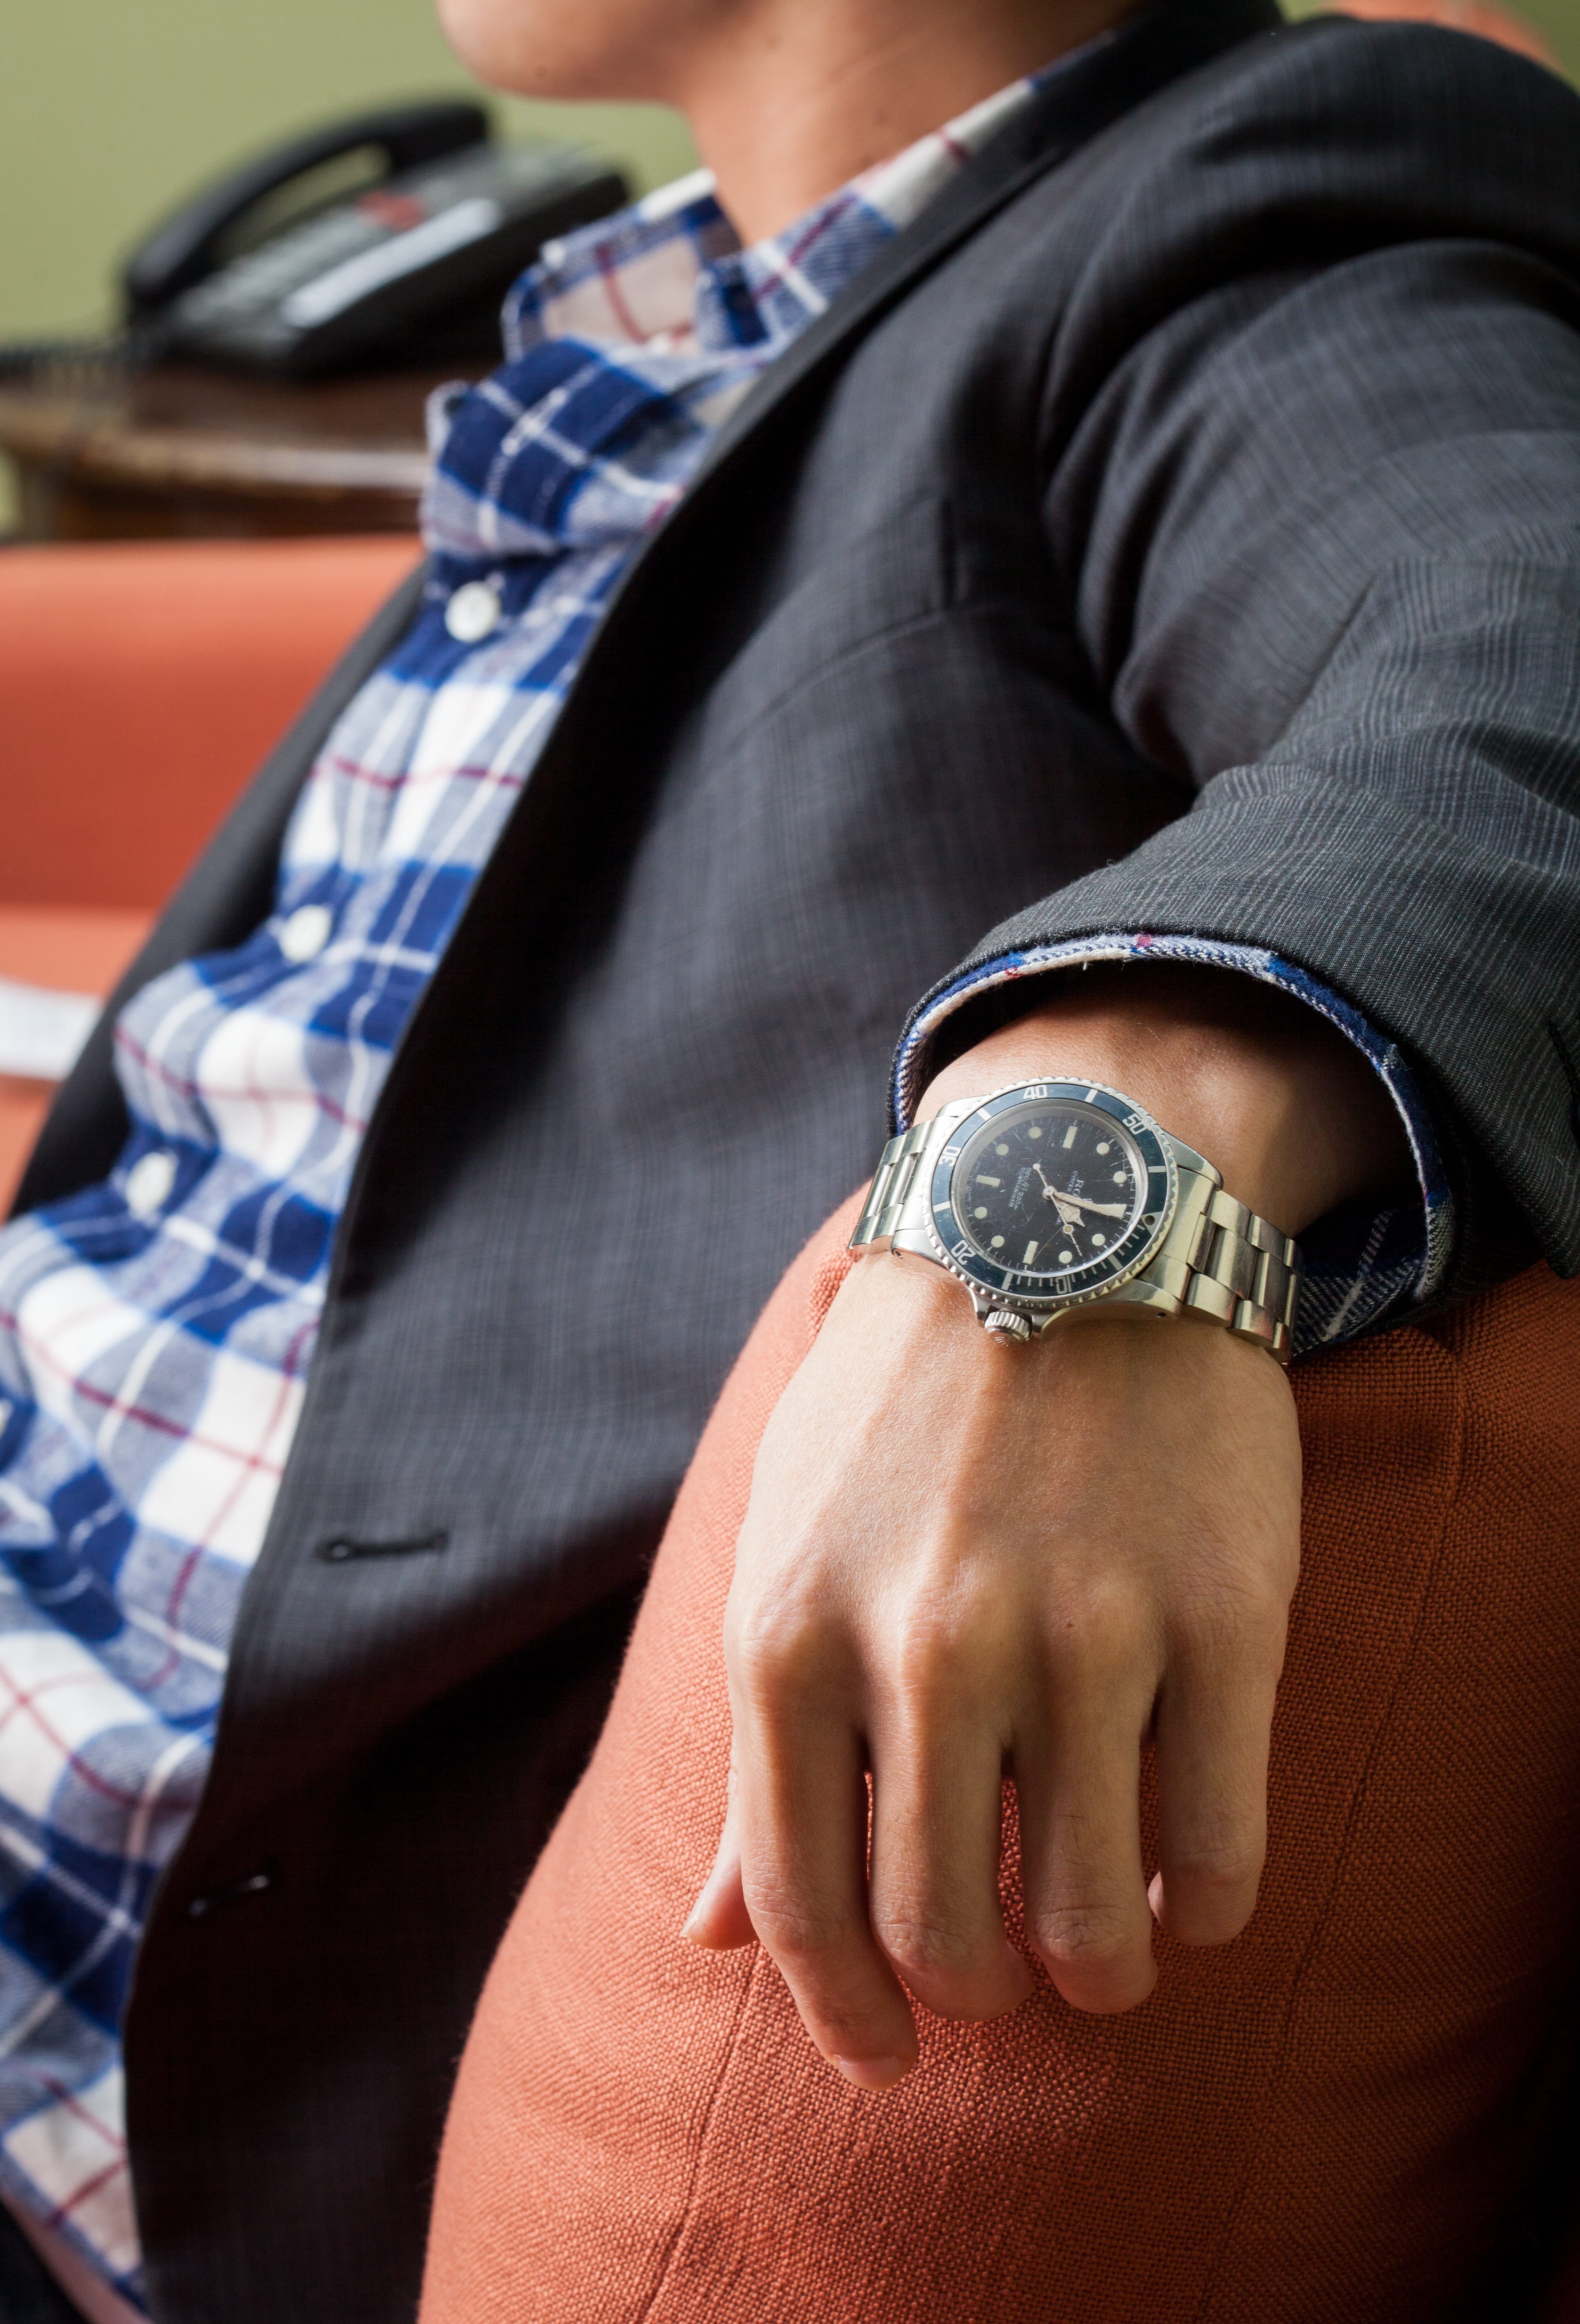 Как правильно надевать часы. Rolex Submariner on hand. Мужские часы на руке. Рука часы элегантная. Мужчина с часами на руке.